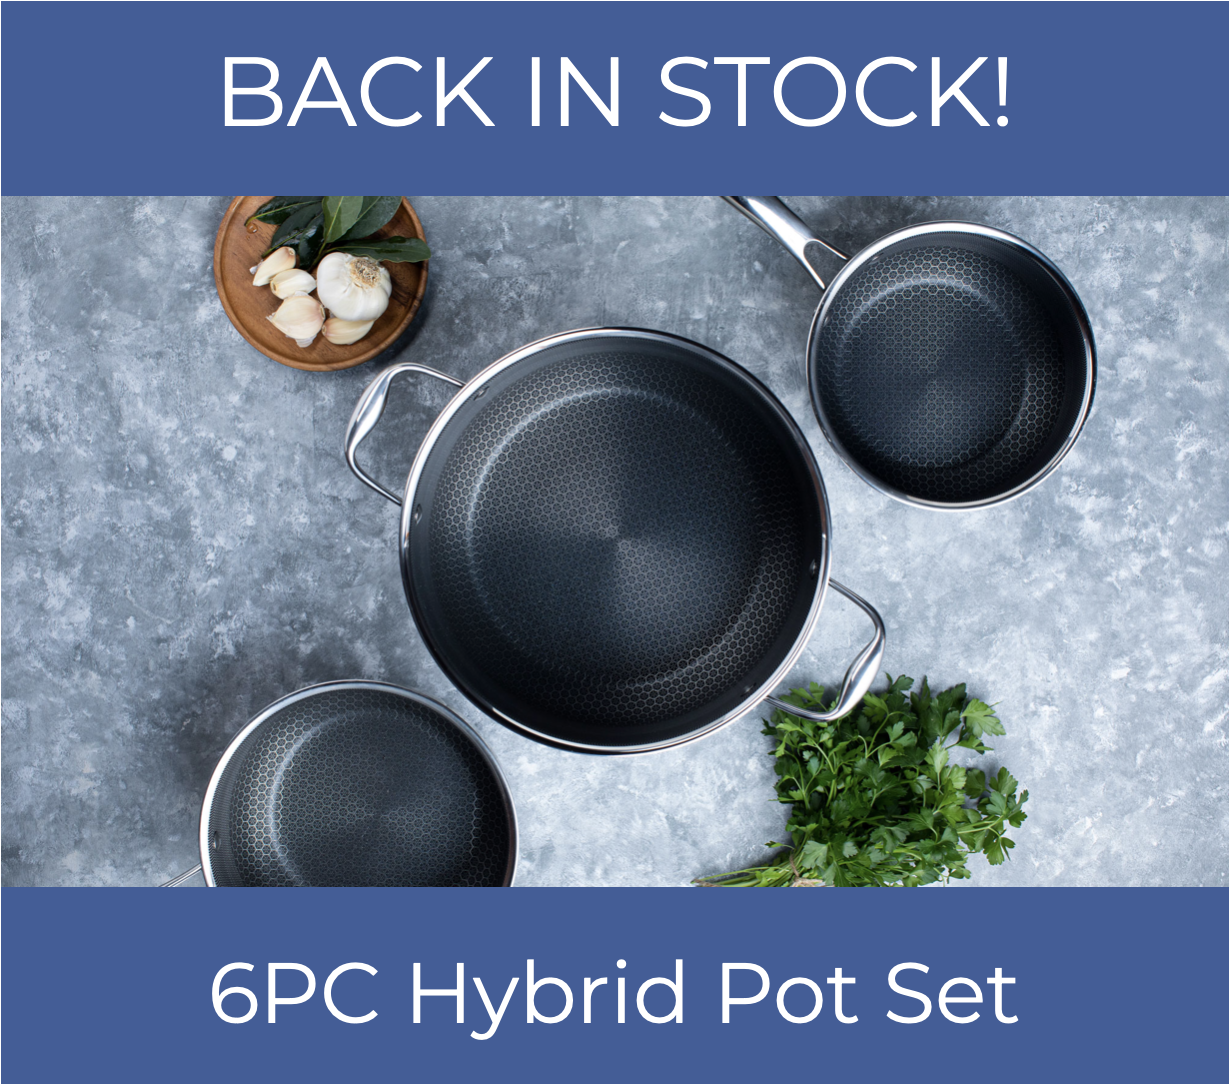 HexClad: Back in Stock! 6PC Hybrid Pot Set